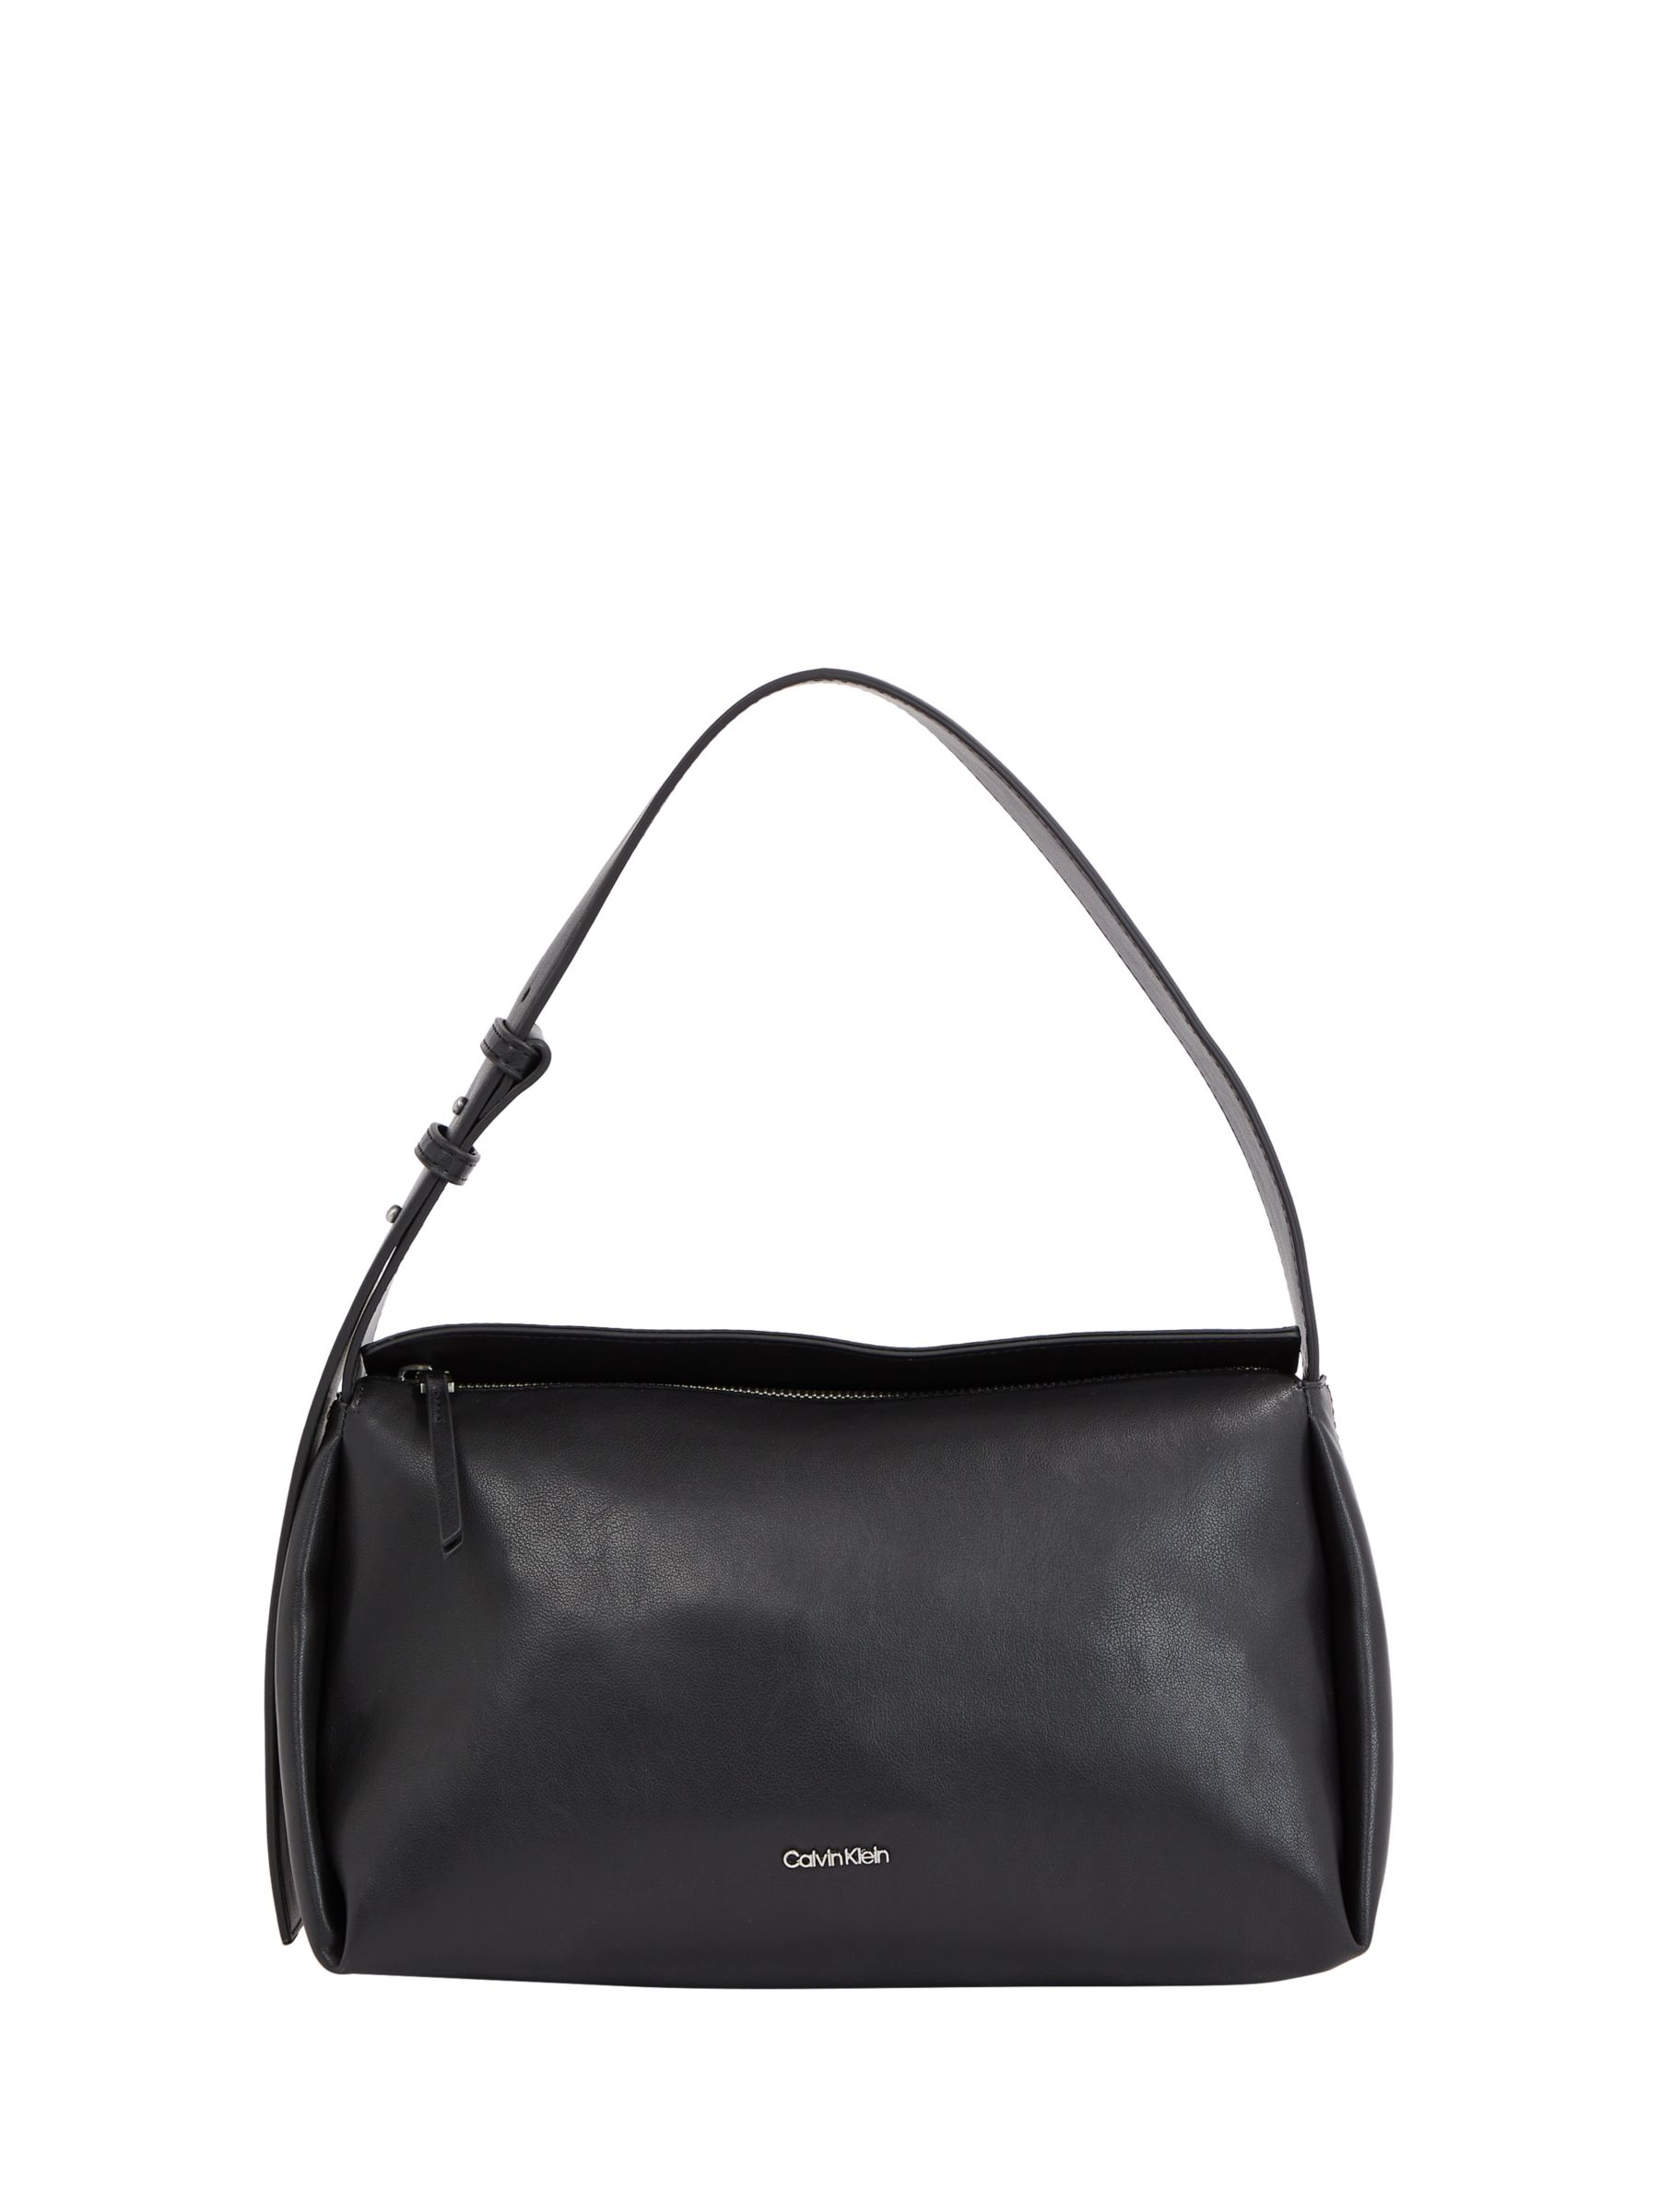 Calvin Klein Jeans MONOGRAM SOFT DUFFLE - Weekend bag - black